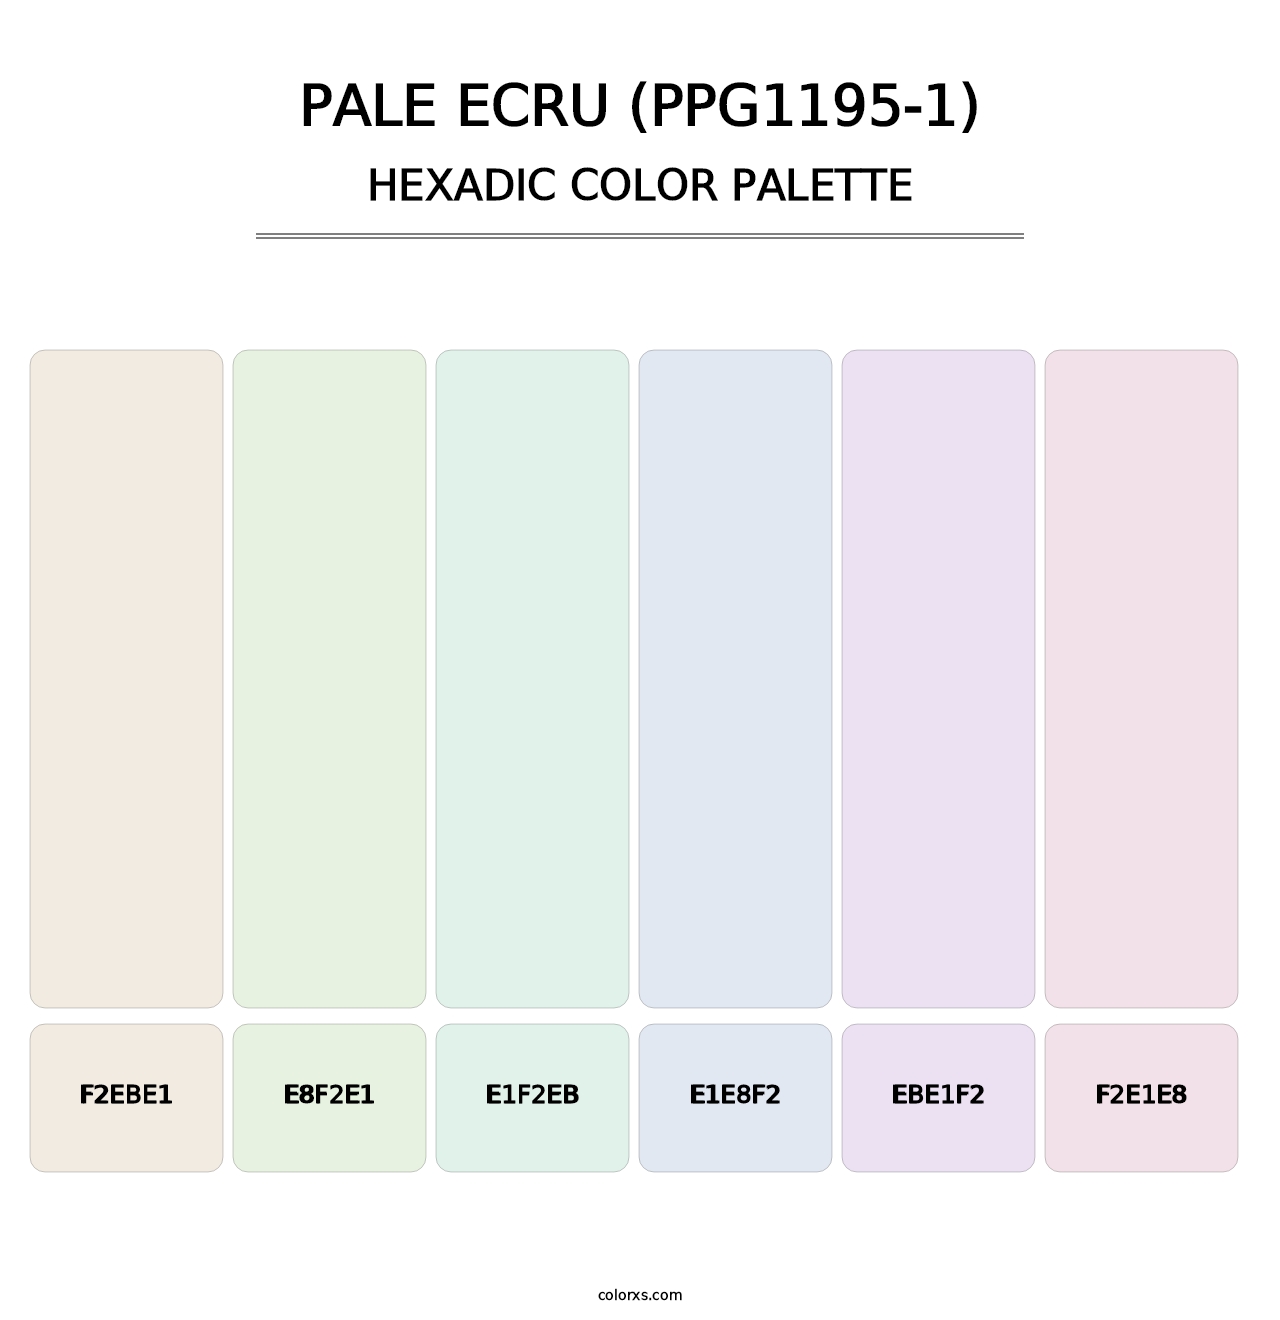 Pale Ecru (PPG1195-1) - Hexadic Color Palette